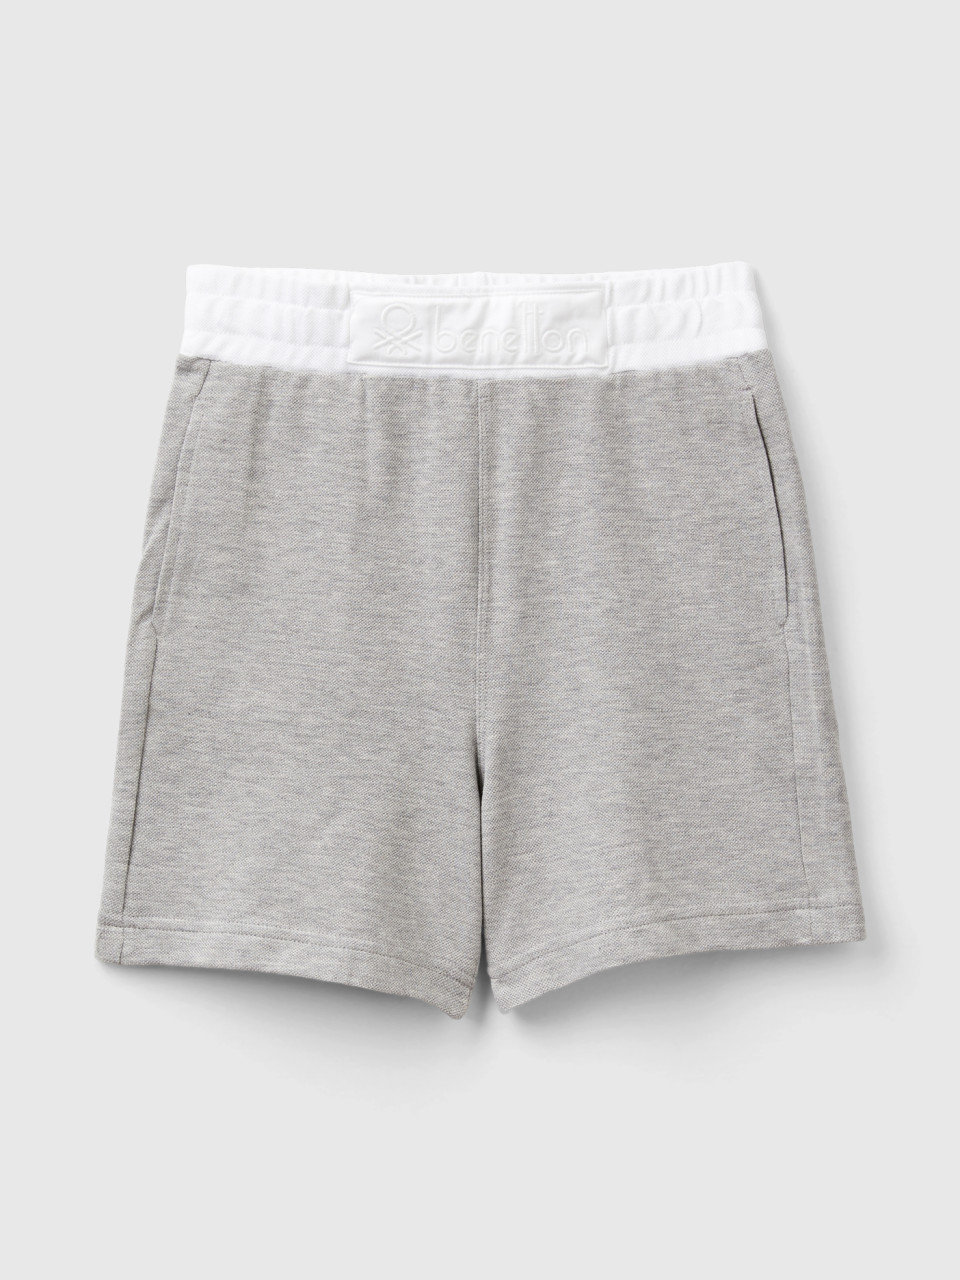 Benetton, Organic Cotton Shorts, Light Gray, Kids